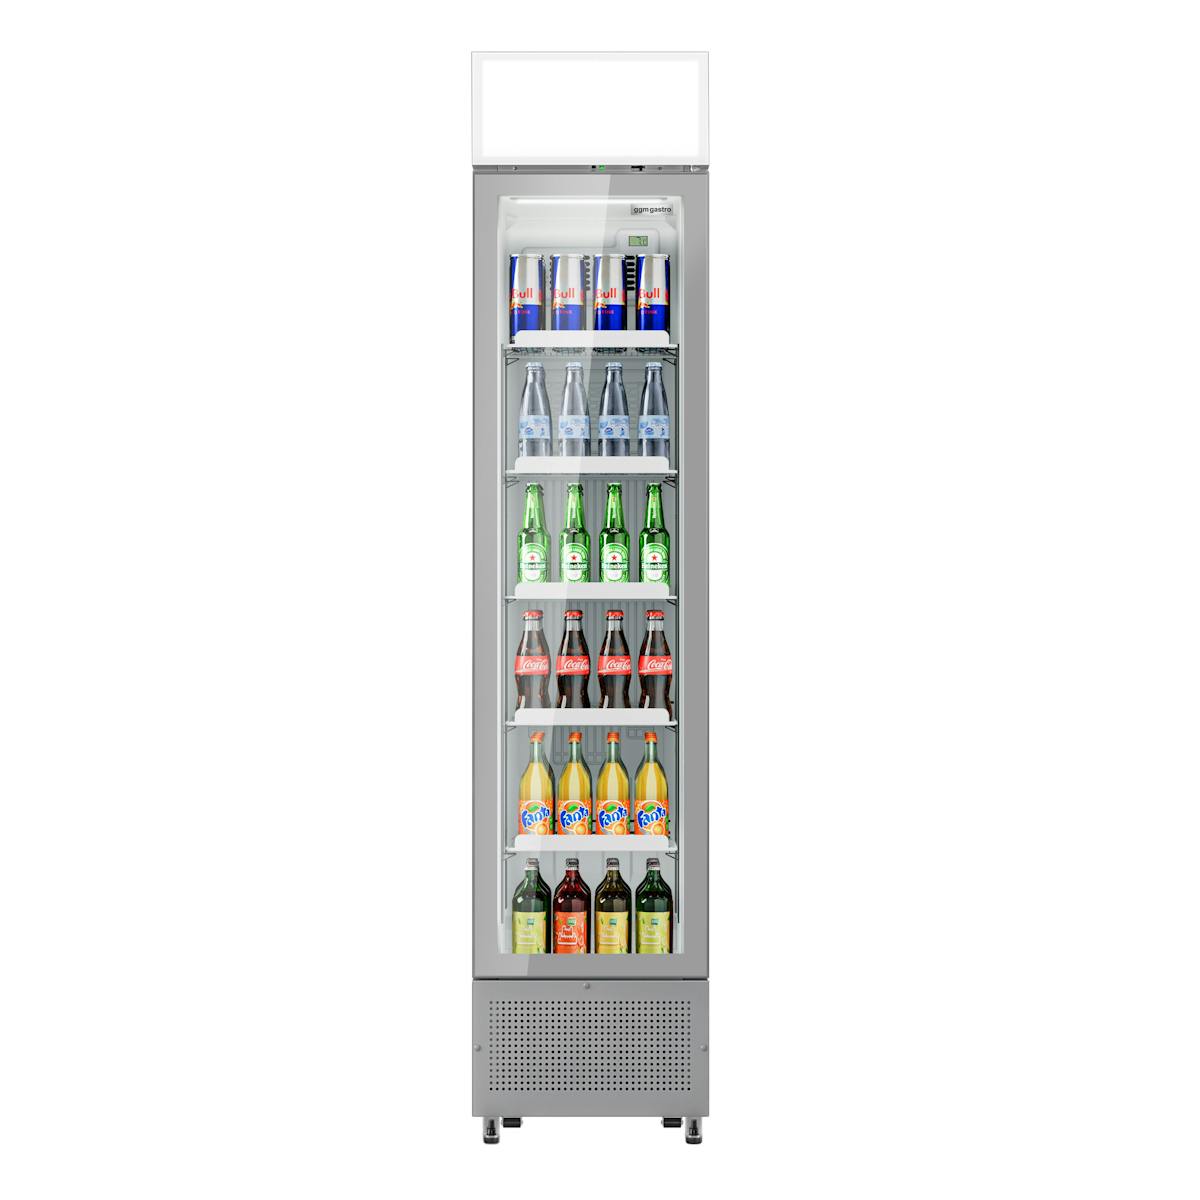 Beverage refrigerator - 145 litres - frameless design - with advertising display